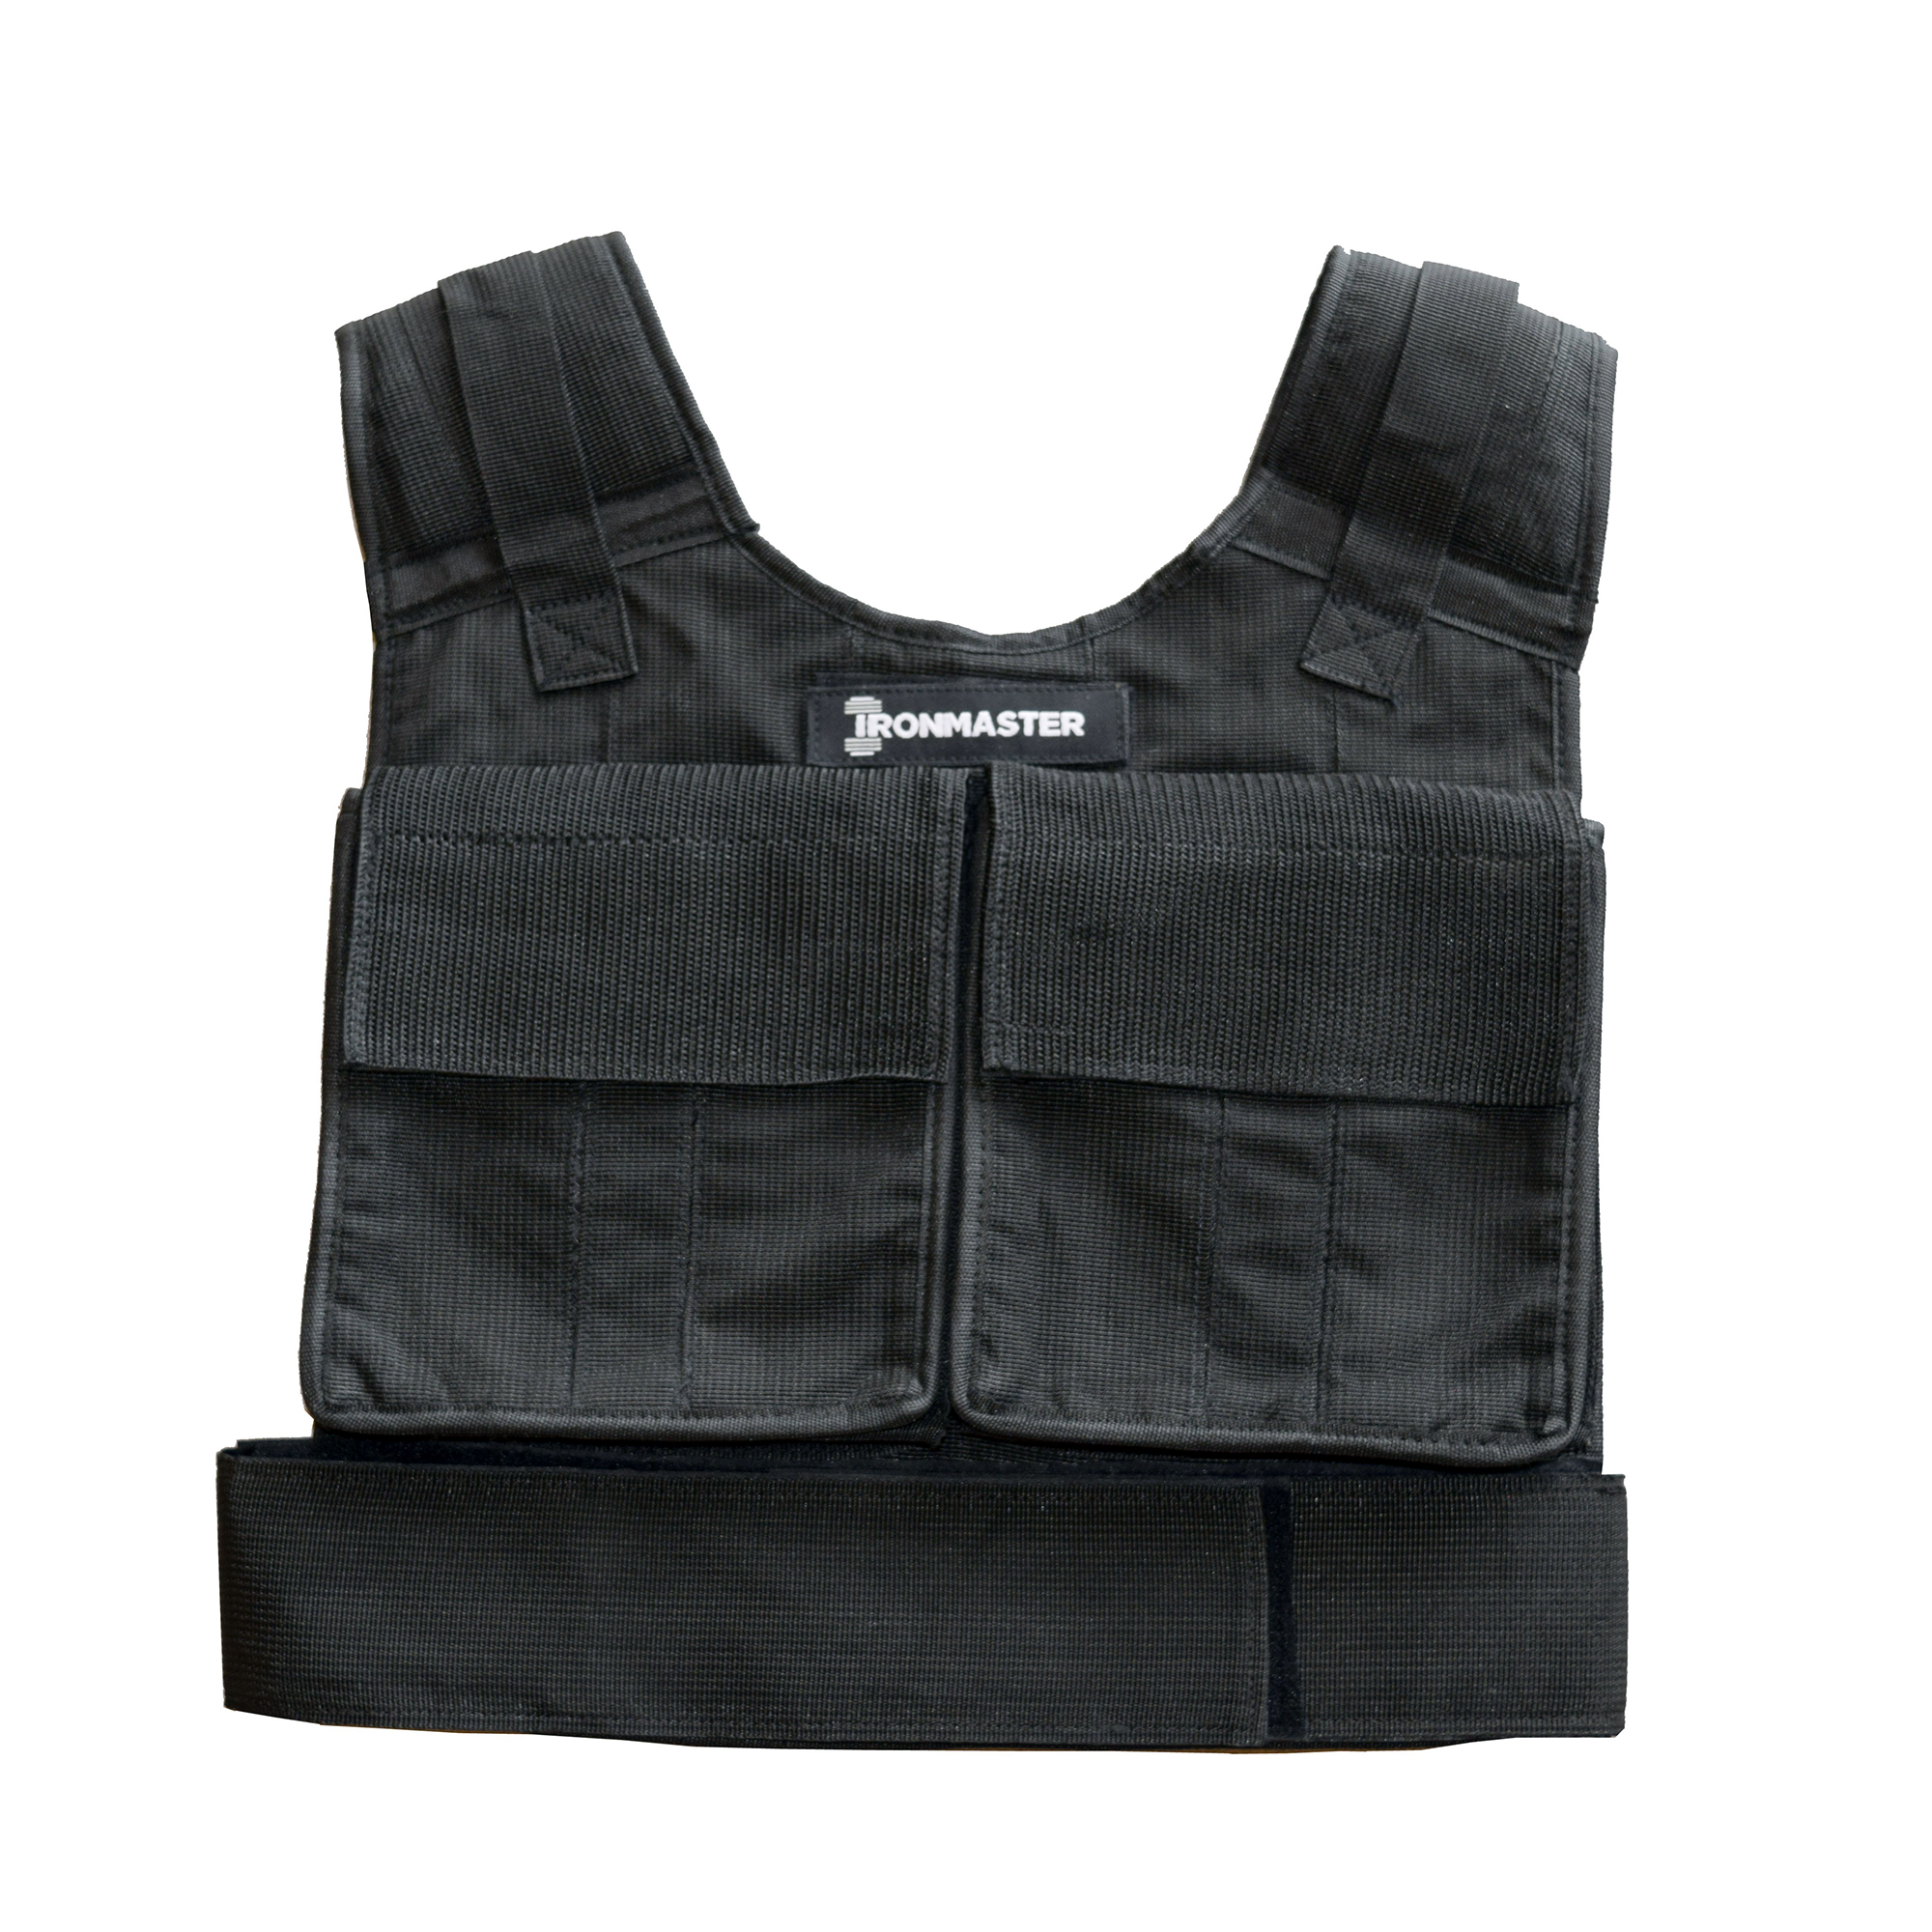 Ironmaster Ultimate Training Vest, Quick-Lock Adjustable Weight Vest